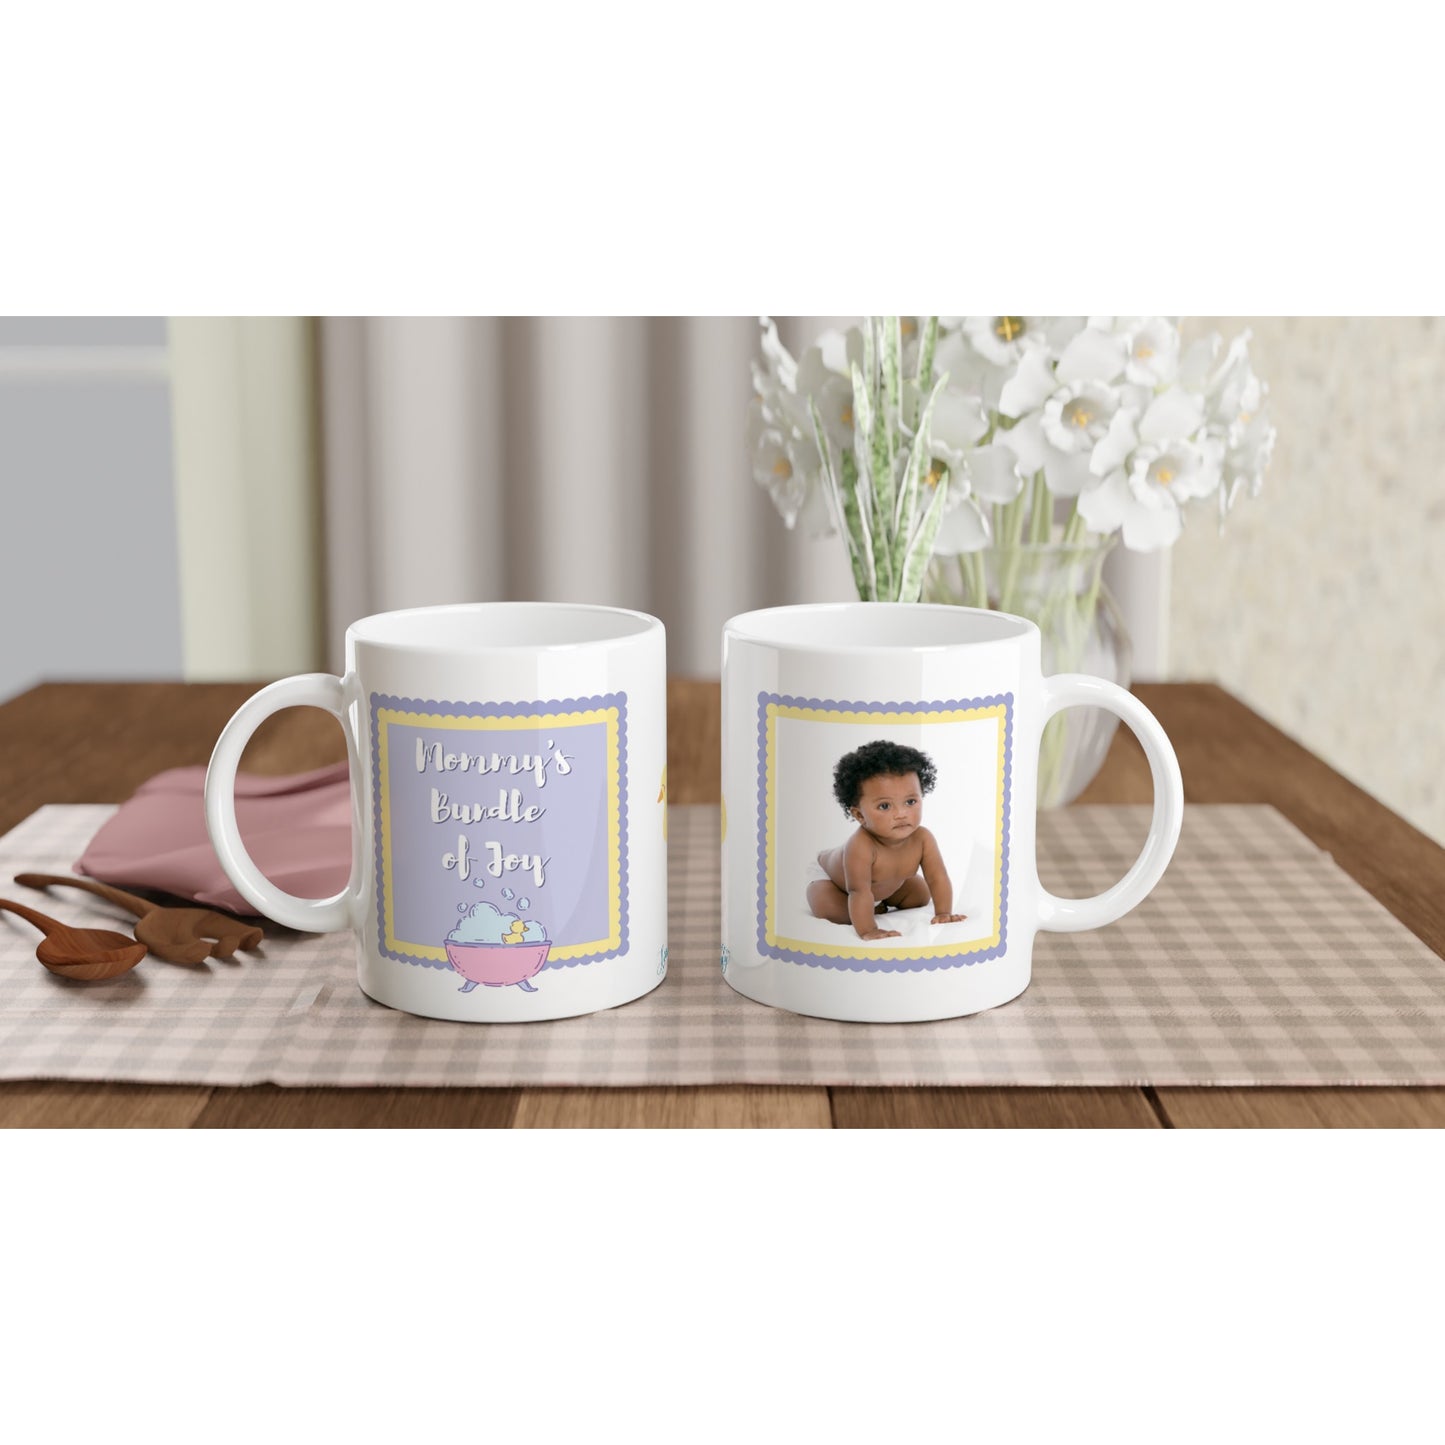 "Mommy's Bundle of Joy" Customizable Photo Mug front and back view sitting on table